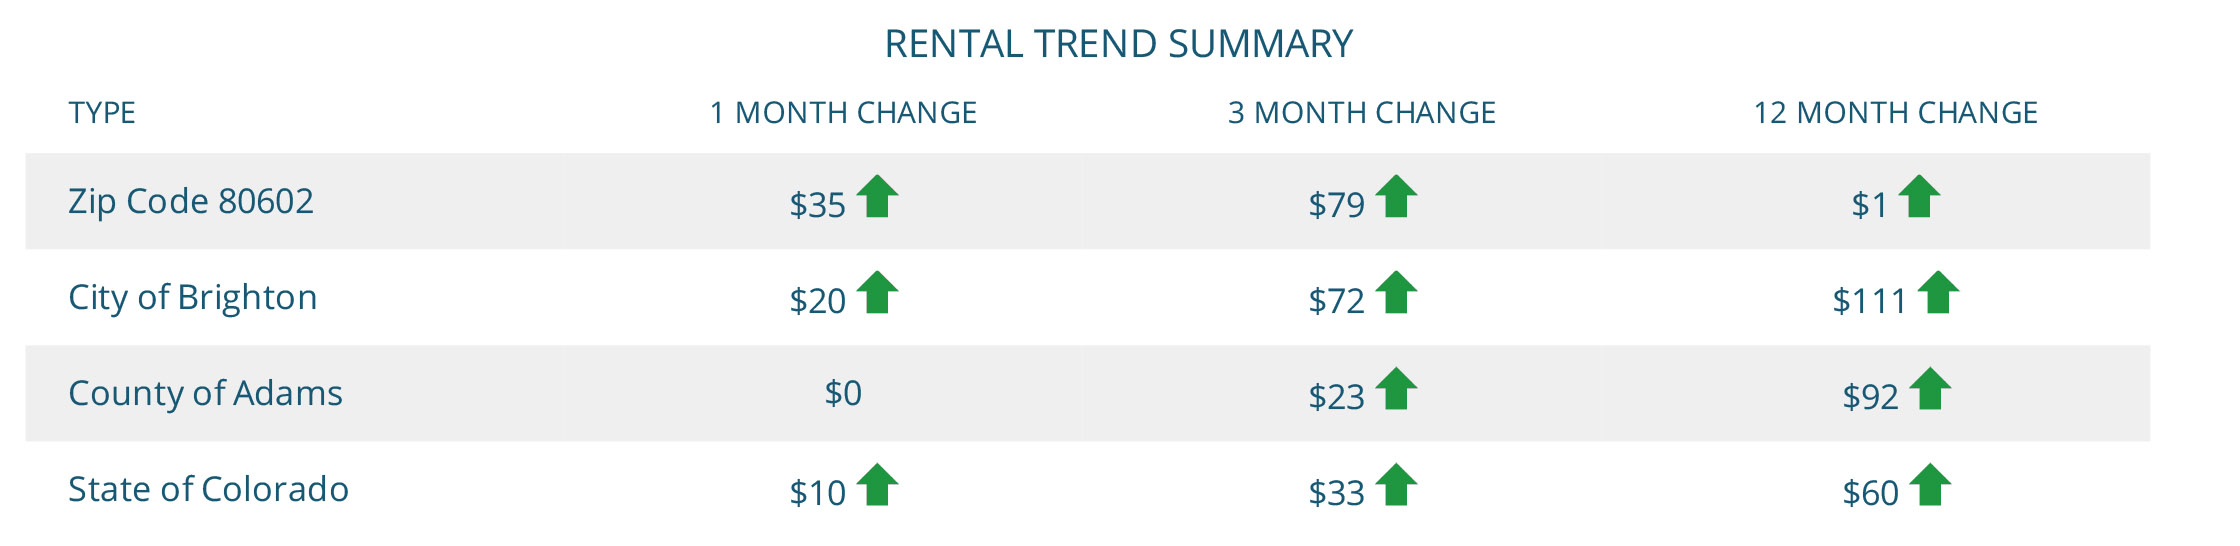 Brighton Rental Trend Summary